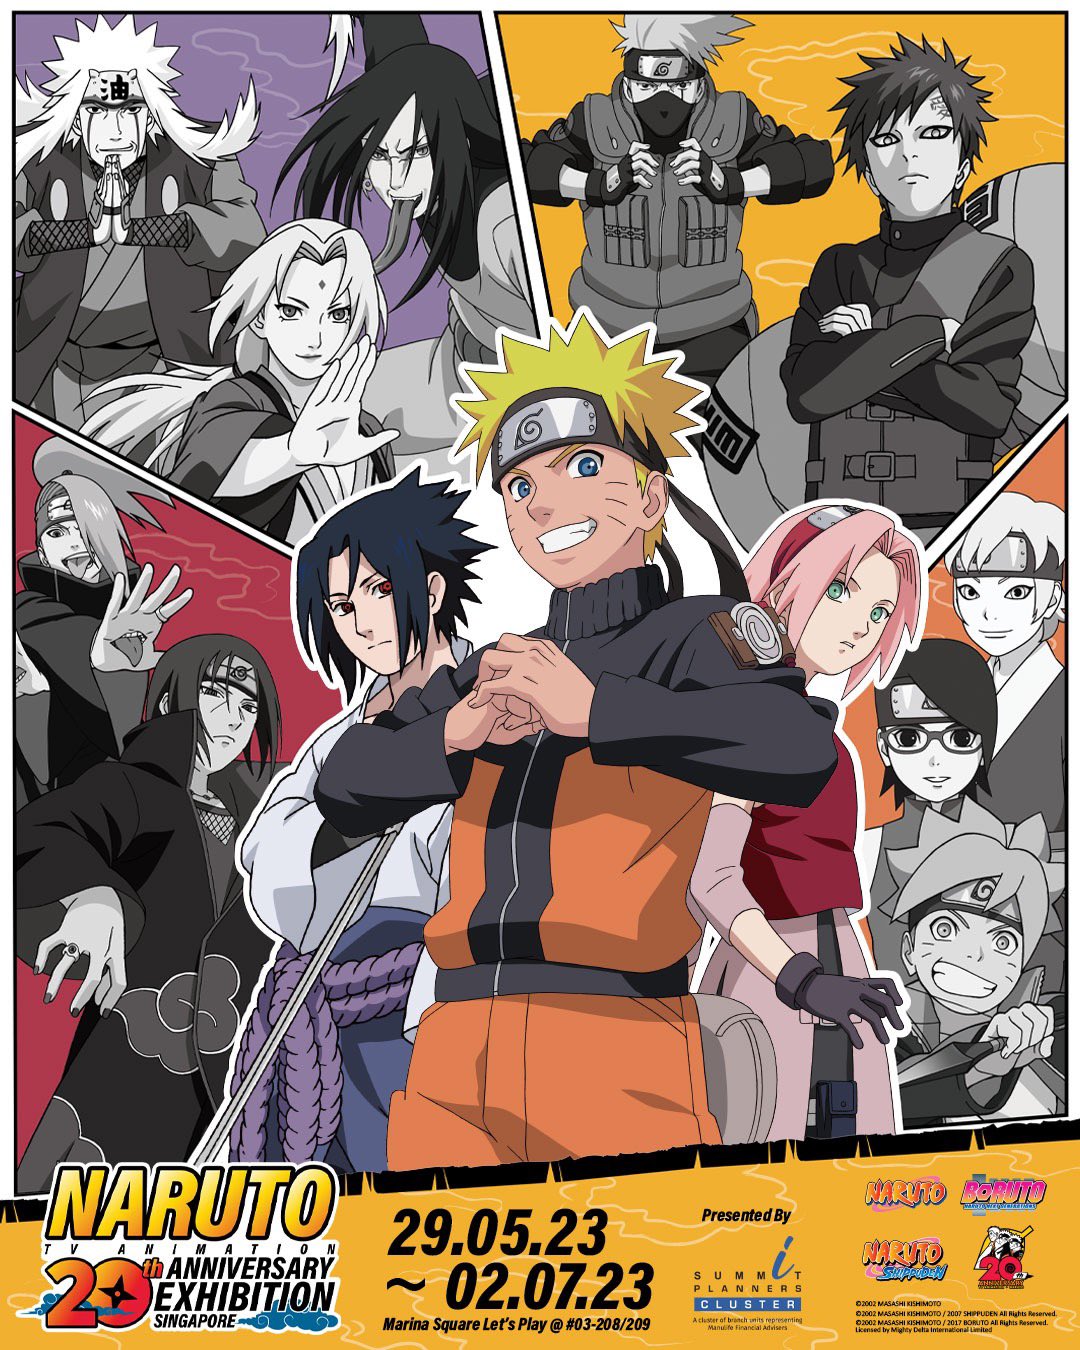 Celebrate Naruto's 20th Anime Anniversary with Crunchyroll! - Crunchyroll  News